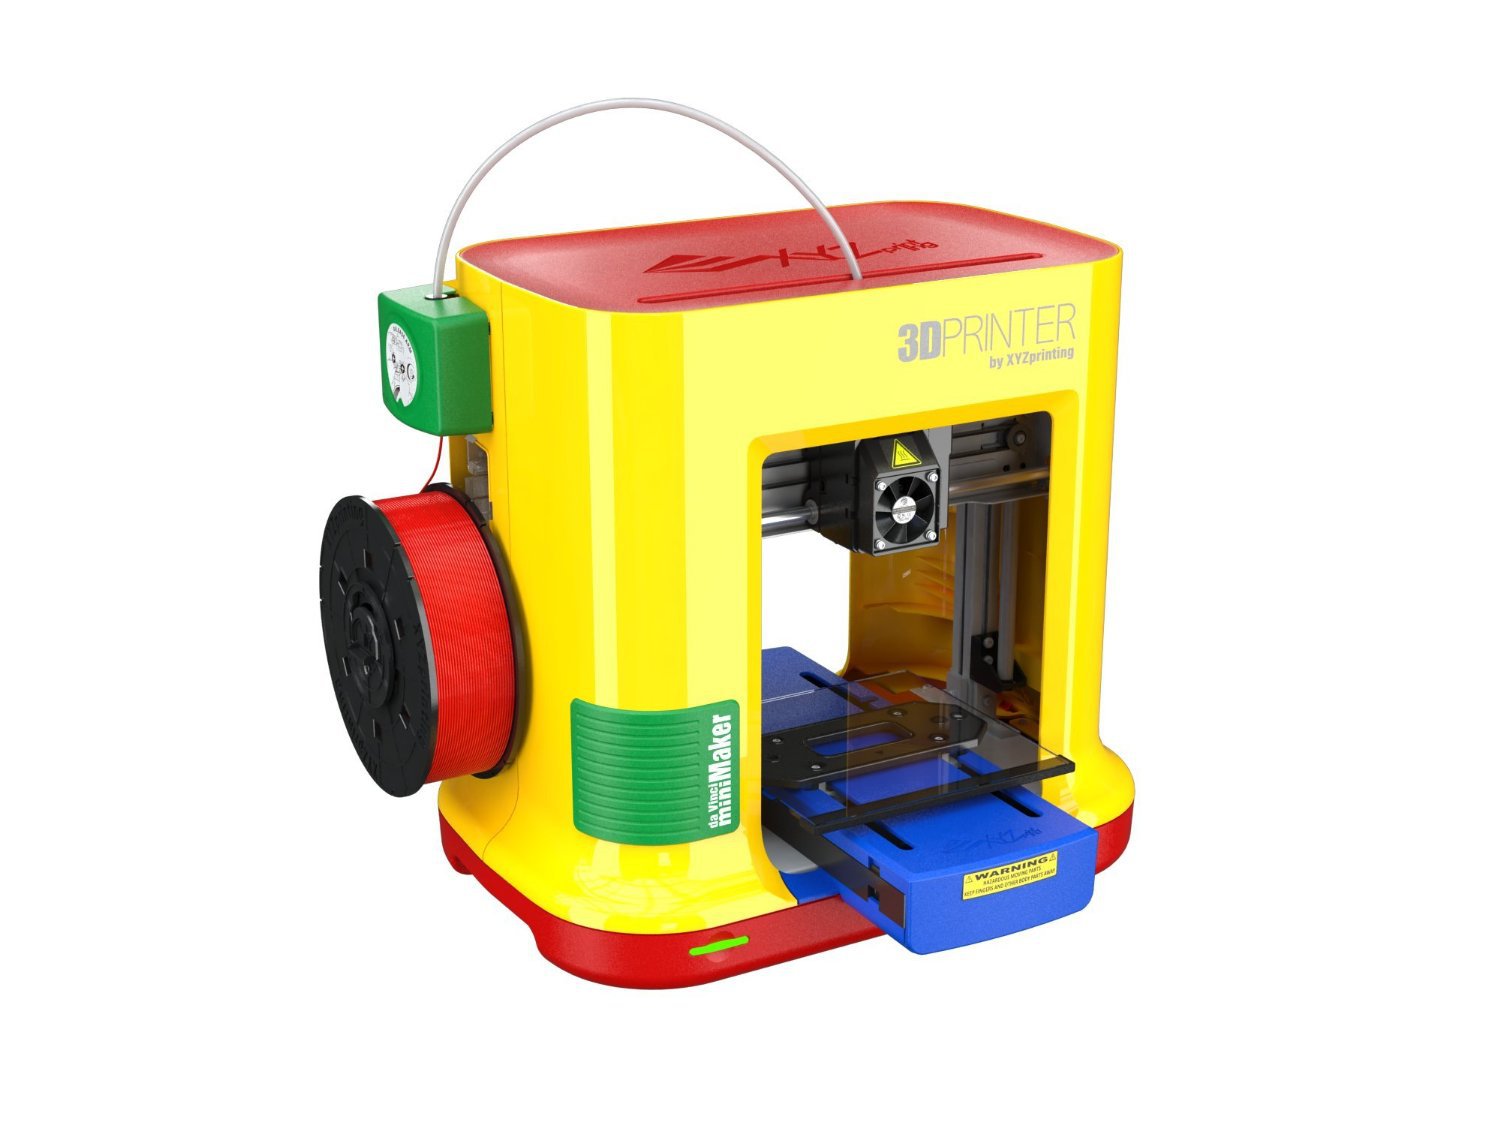 News: XYZprinting da Vinci miniMaker 3D printer available for $229.99 pre-order – Armchair Arcade